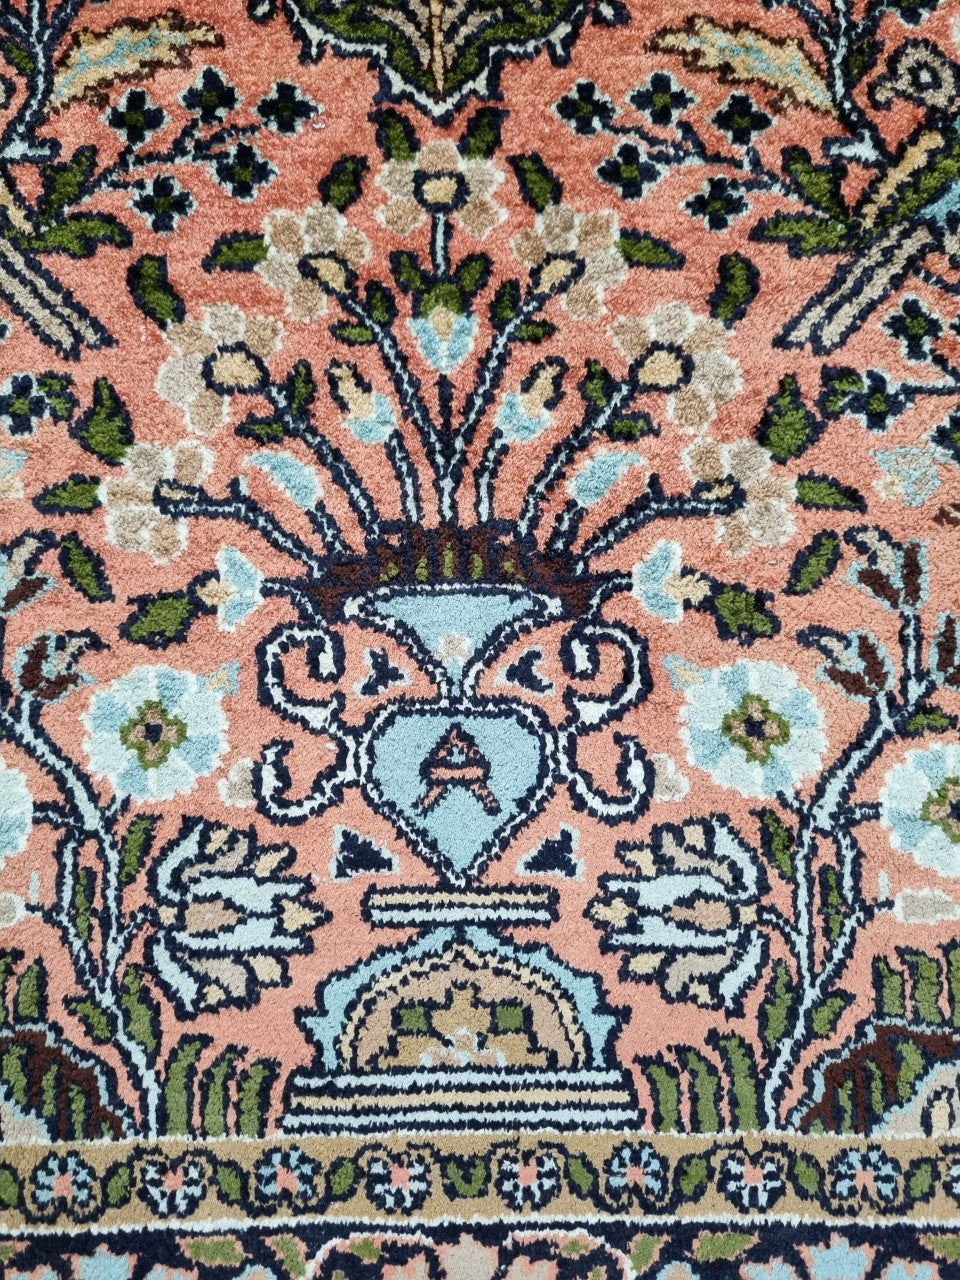 Antique India Kashimir silk rug